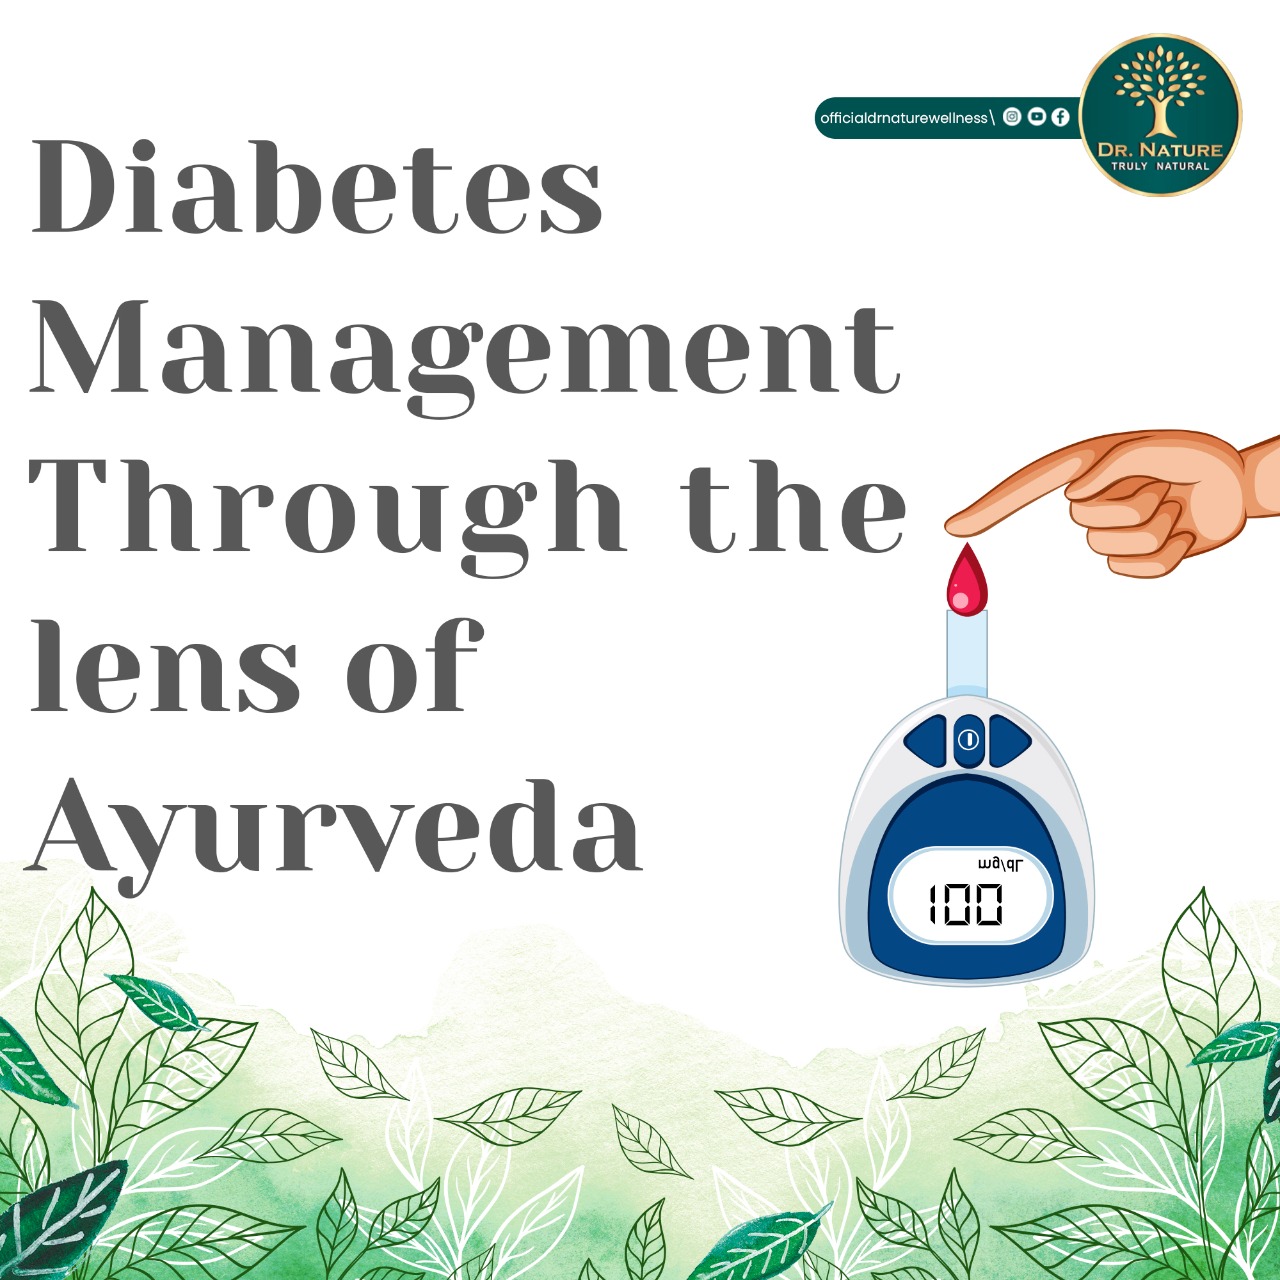 Diabetes Management through the lens of Ayurveda